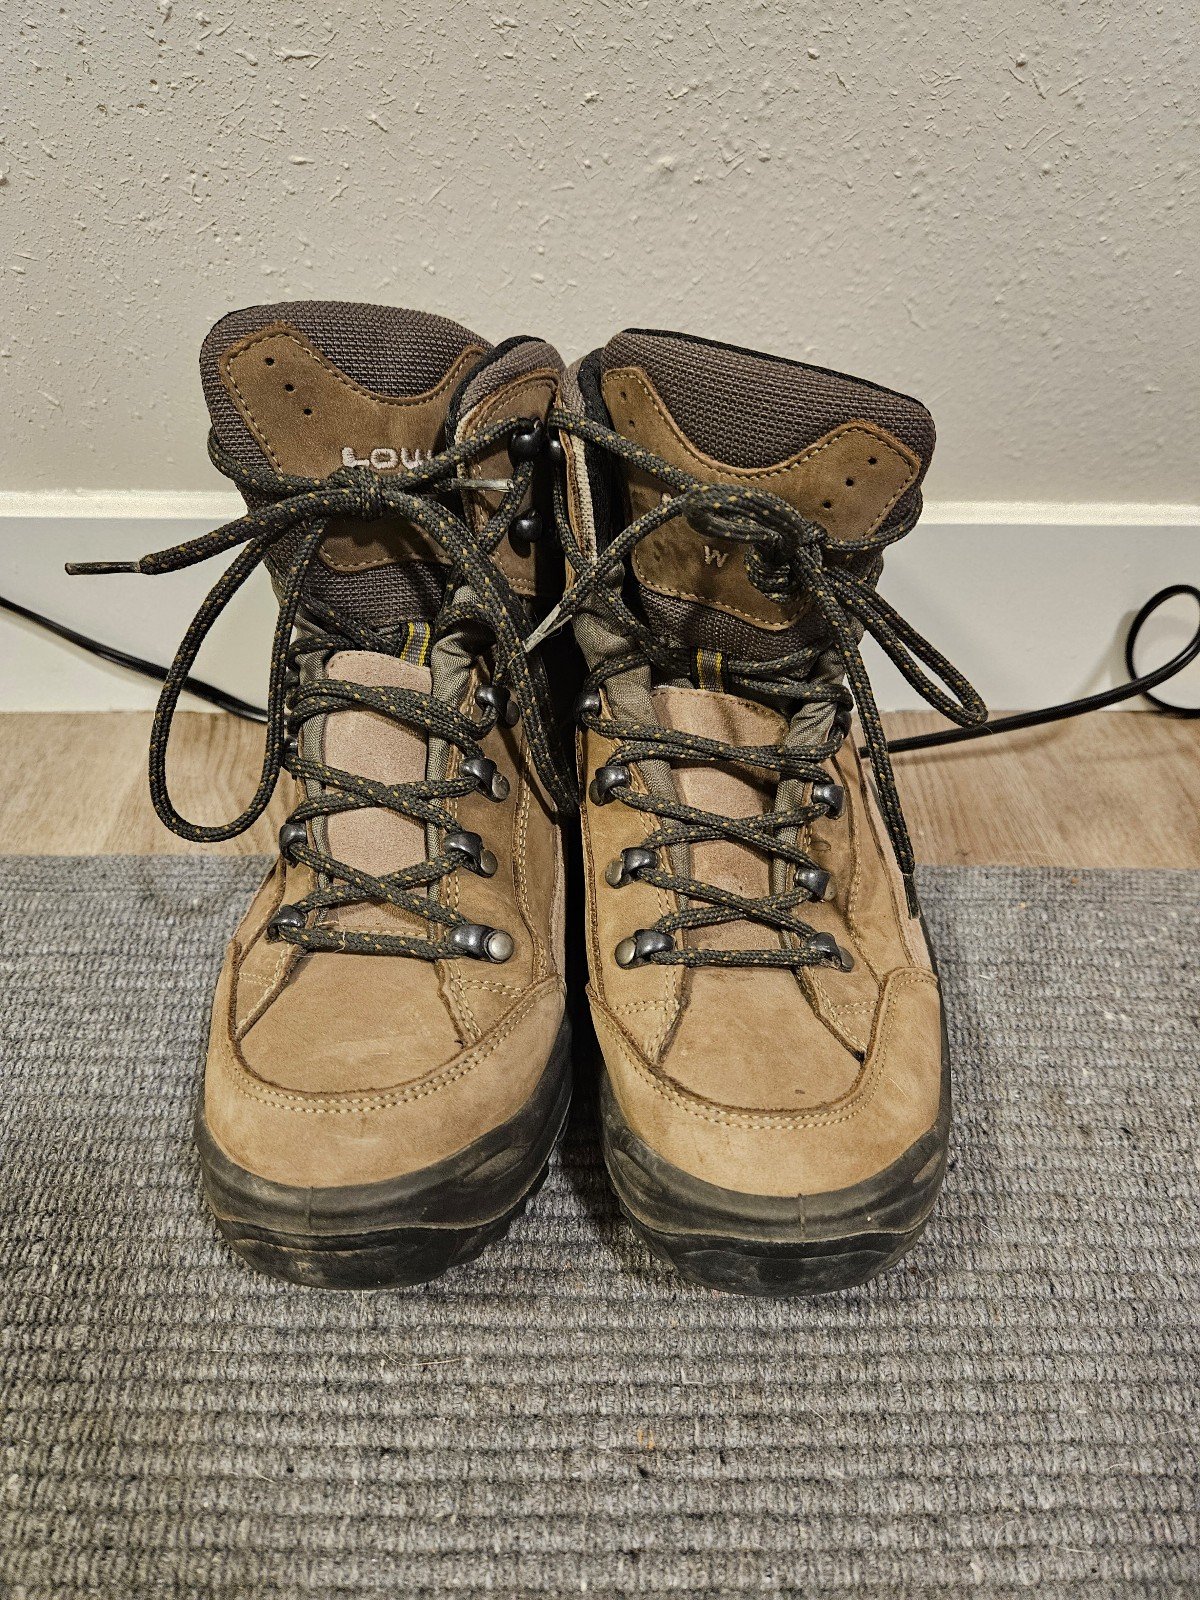 Lowa RenegadesRenegade GTX Mid Hiking Boots - Wide eu8E